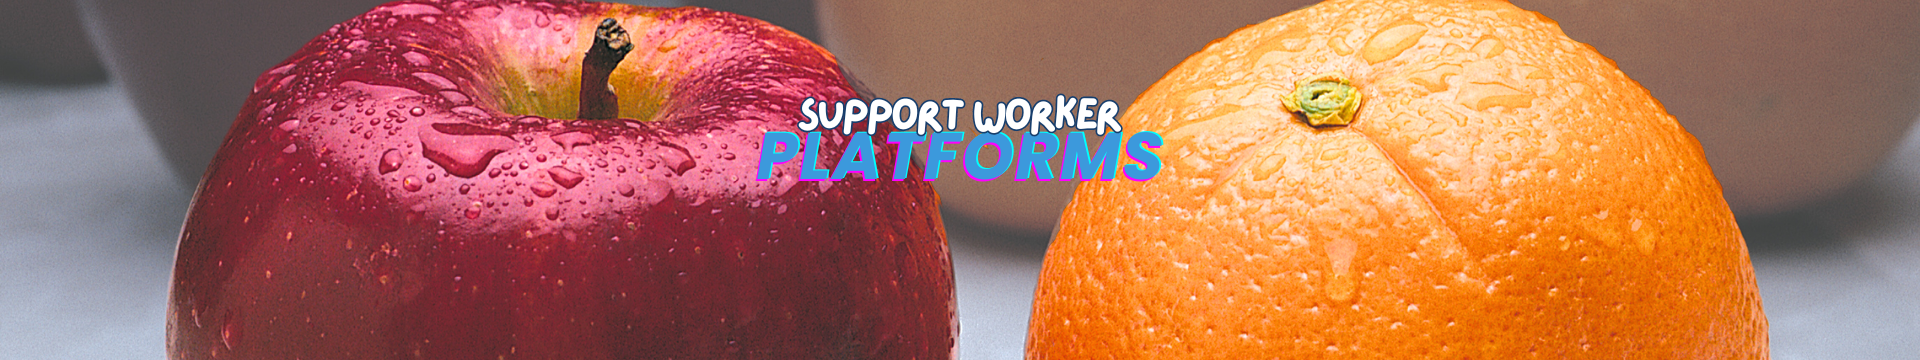 Comparing support worker platforms.